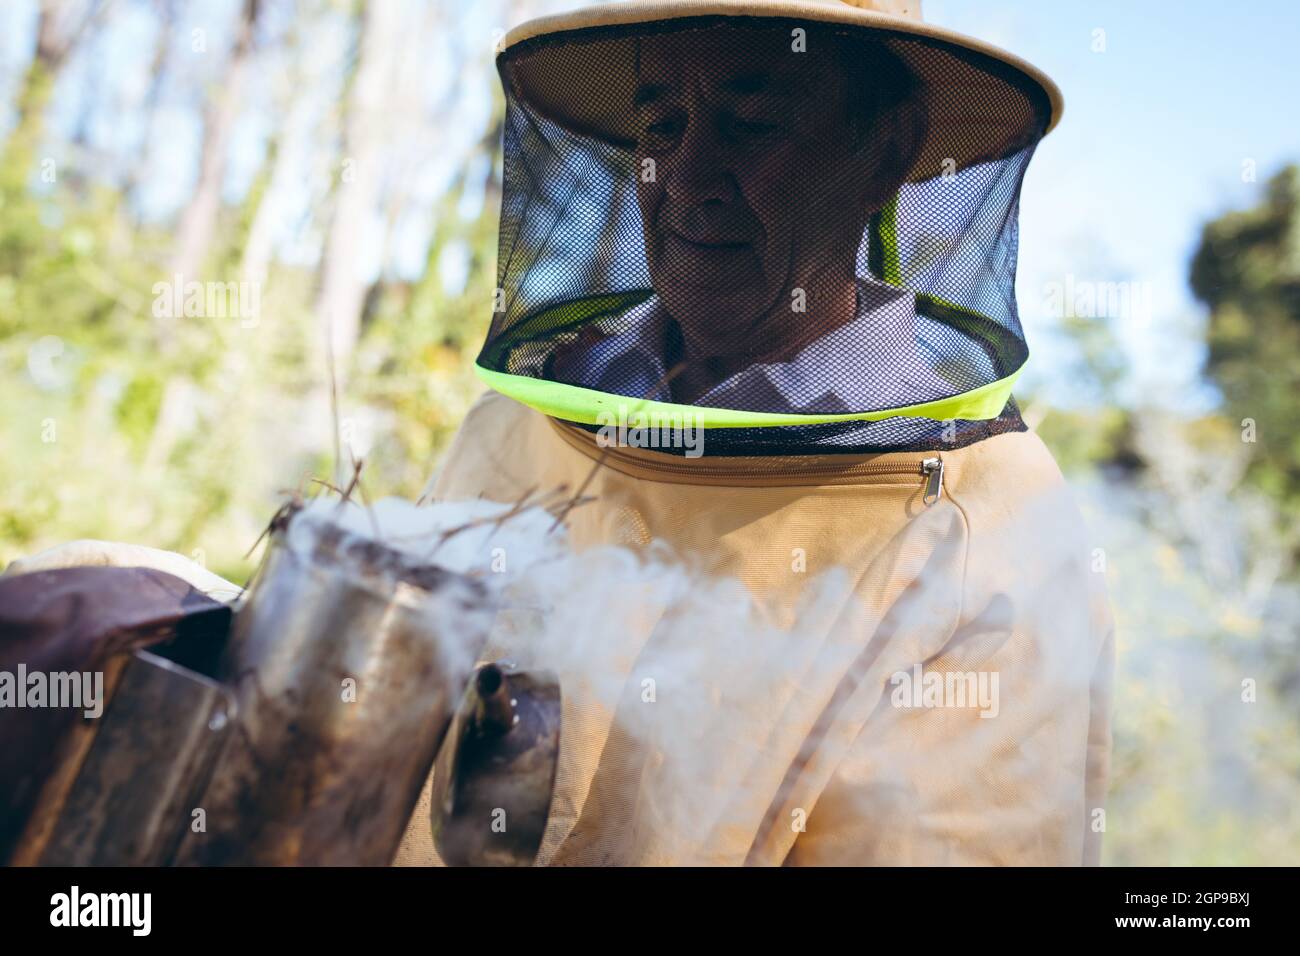 Caucasian senior man wearing beekeeper uniform holding tool with smoke to calm bees Stock Photo